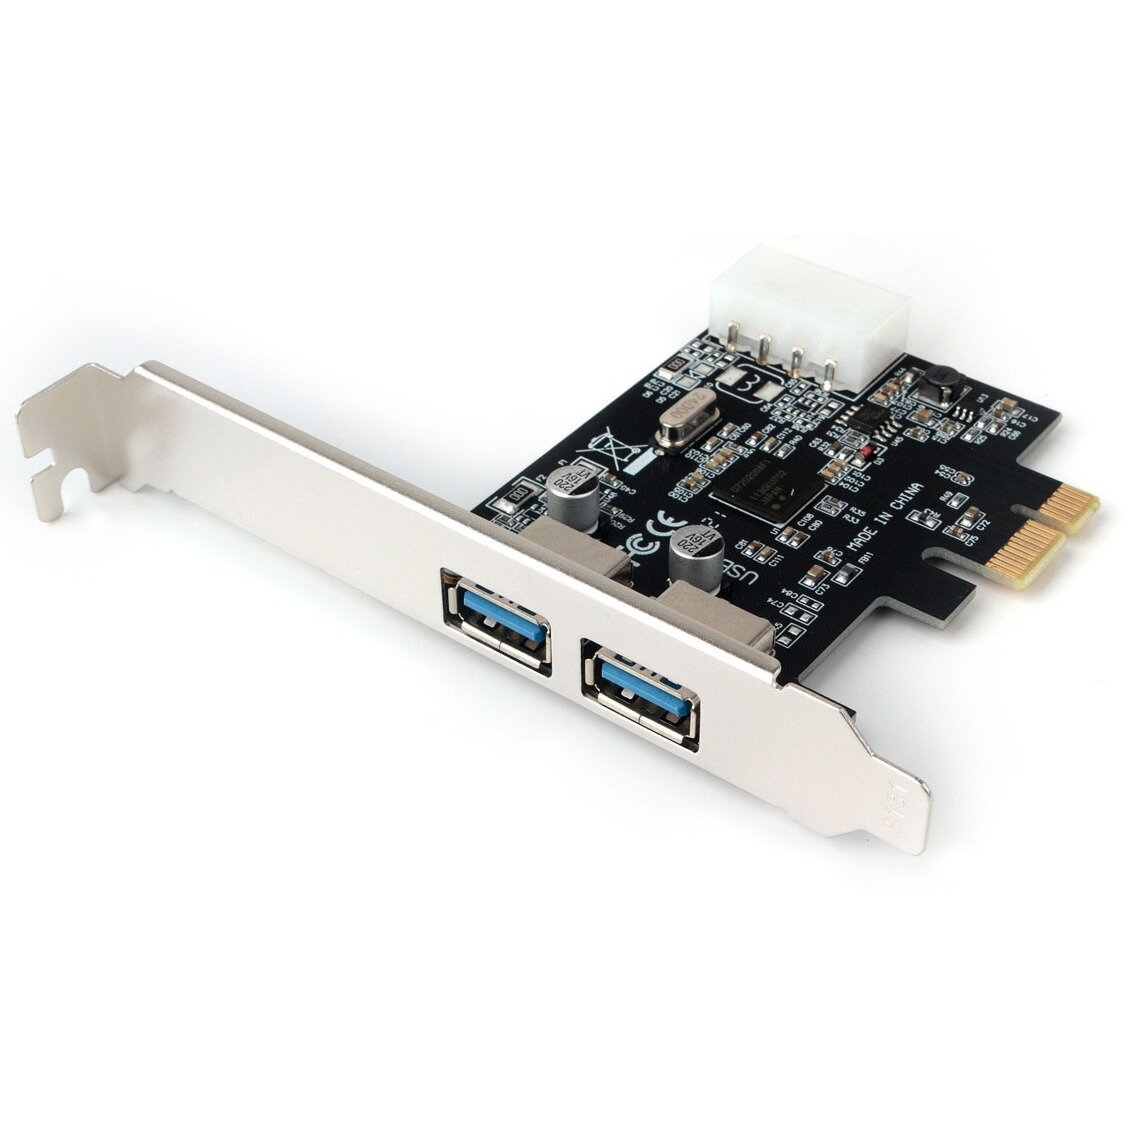 Хаб USB Gembird SPCR-01